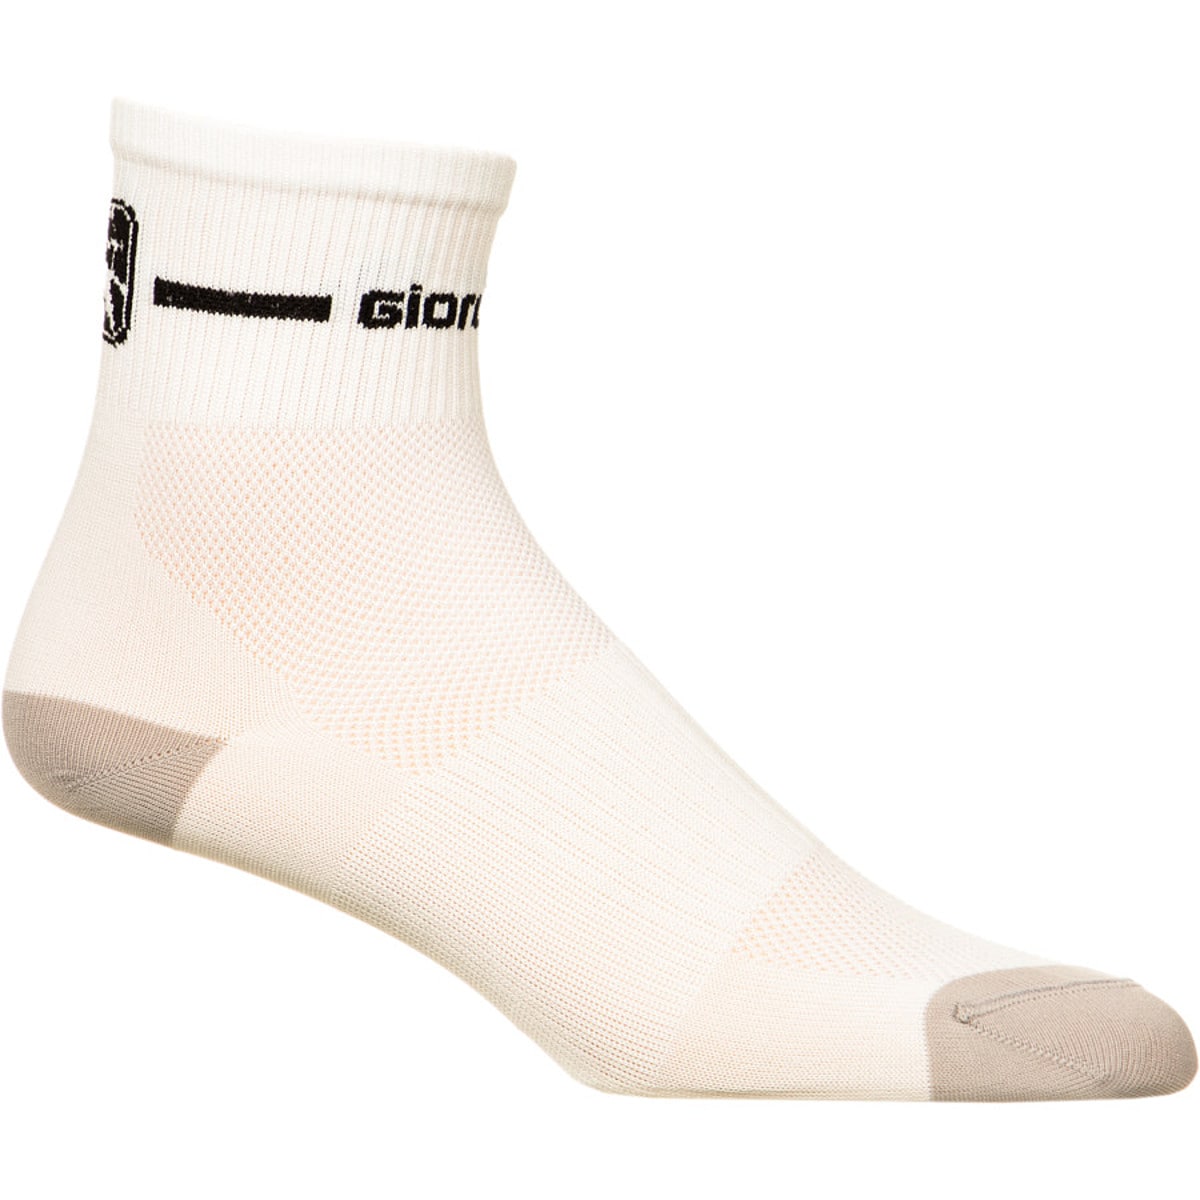 Giordana Trade Mid Cuff Socks - Men's